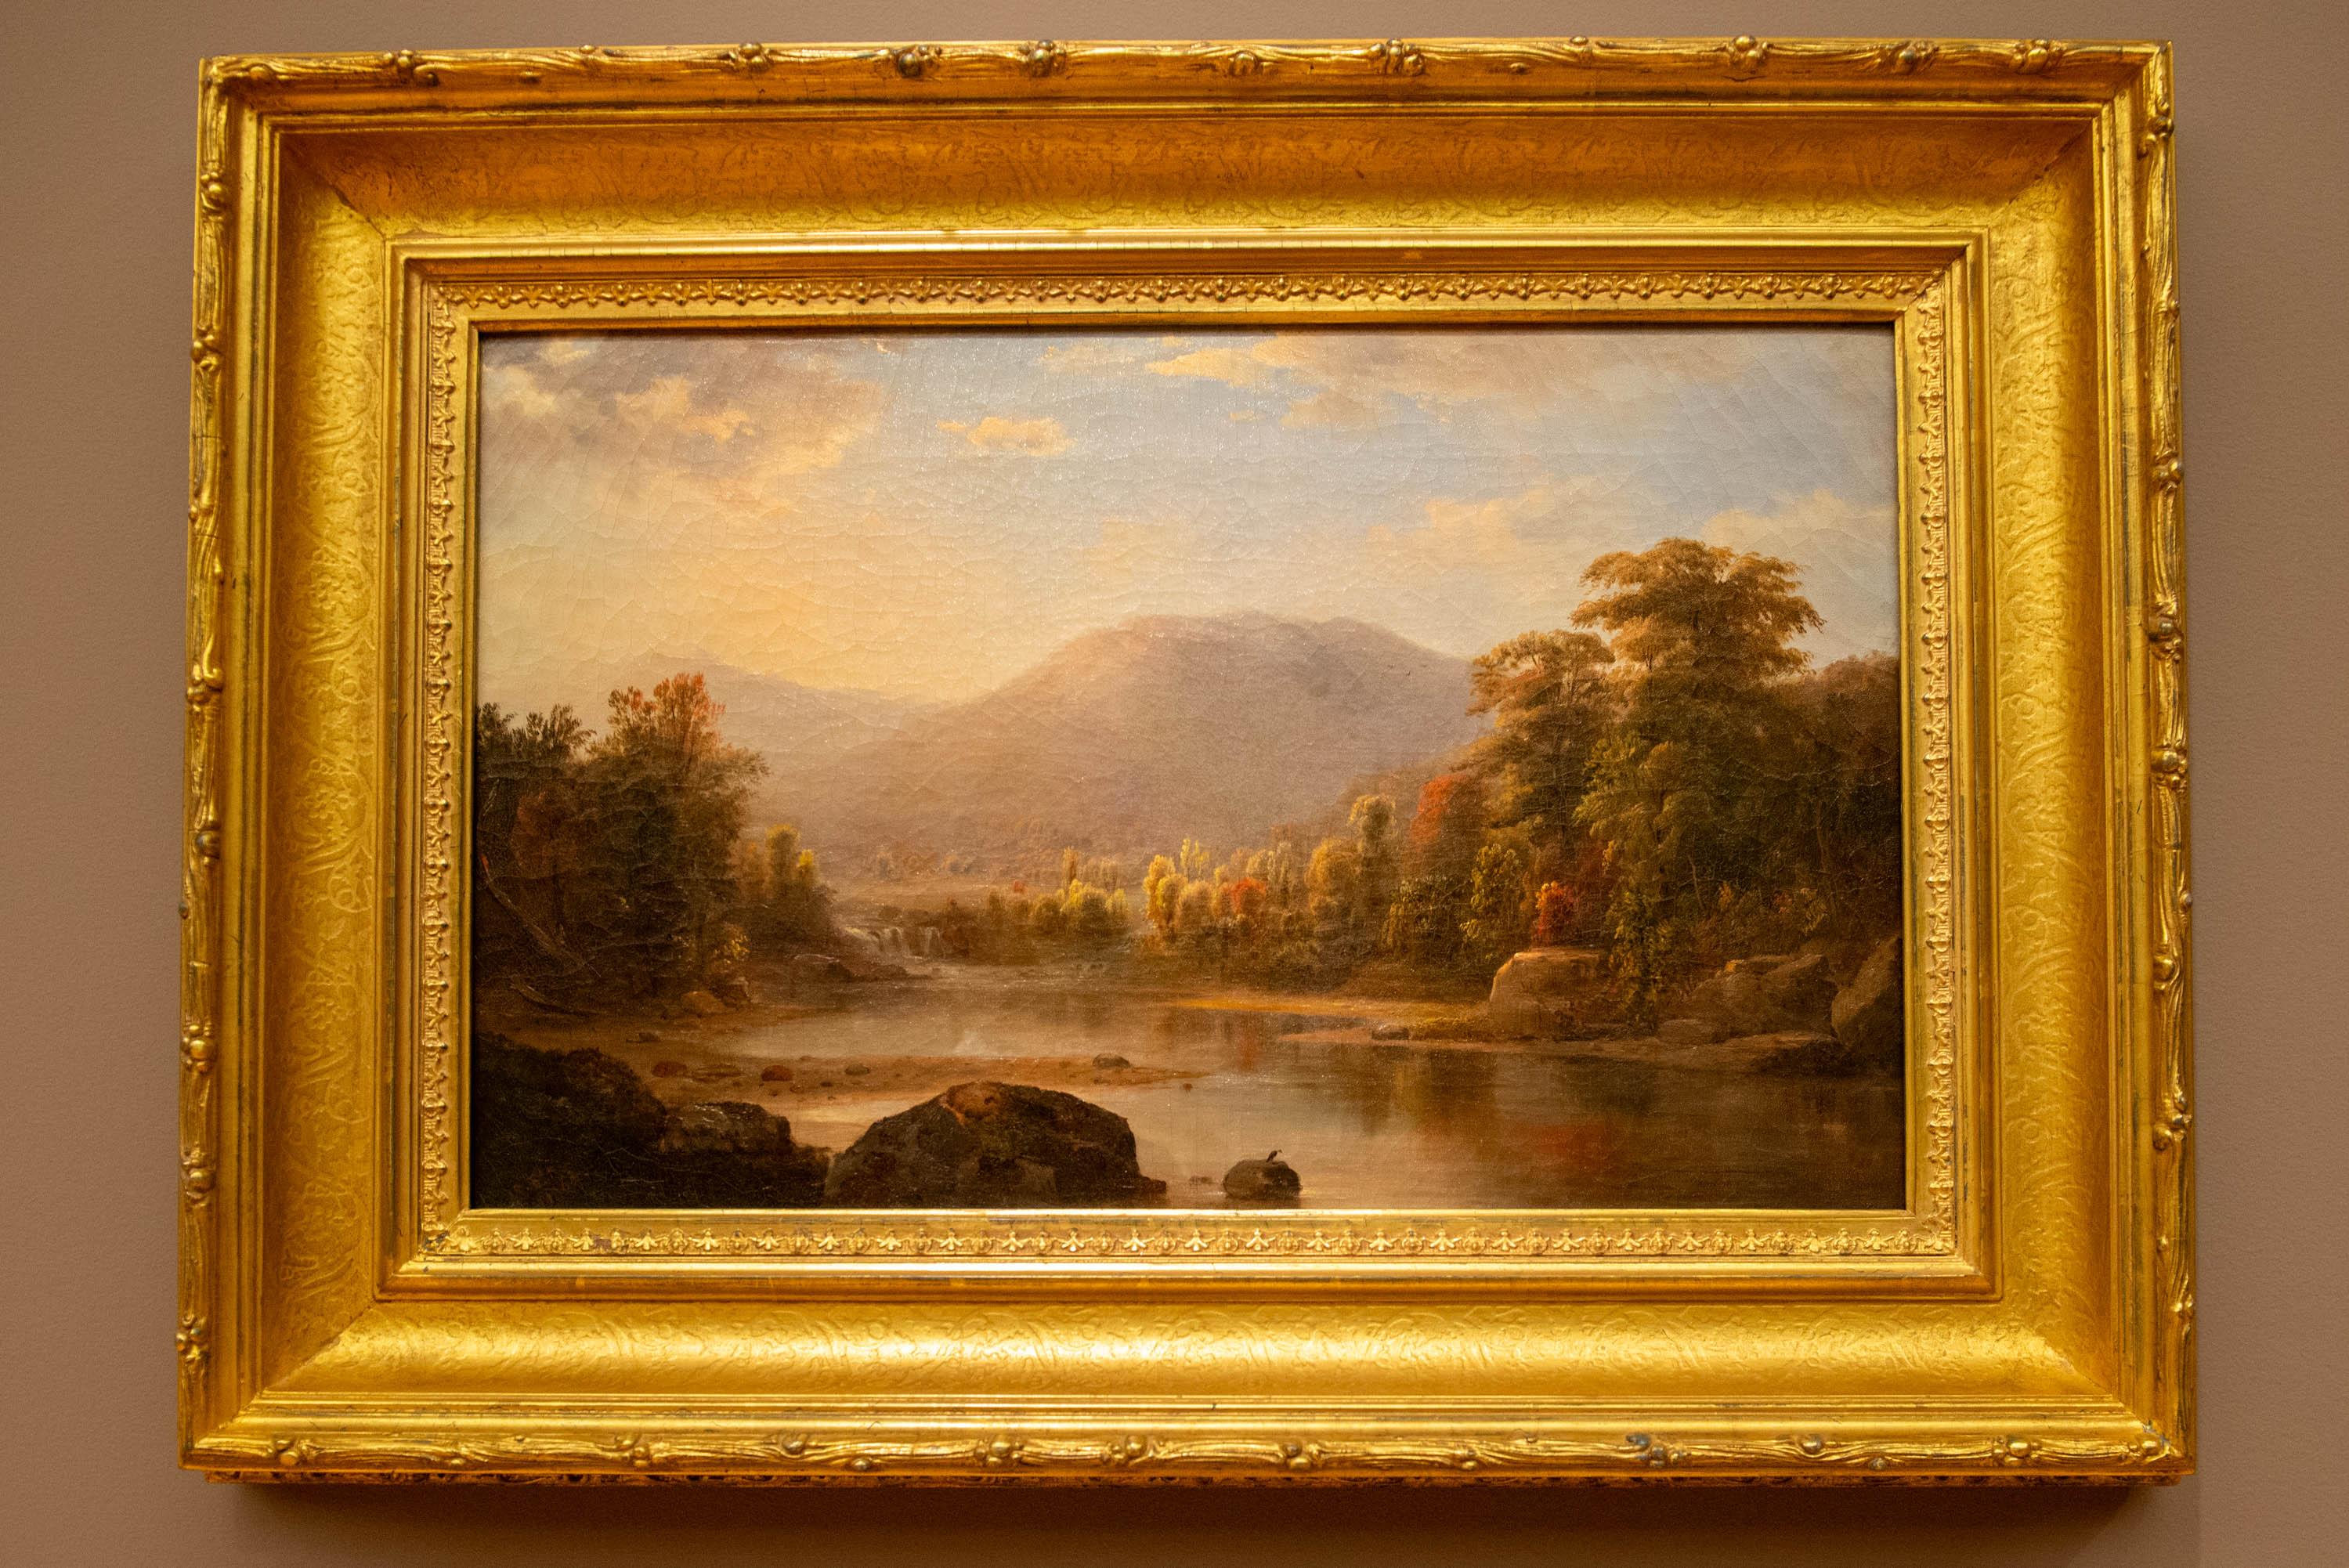 Silver River, North Carolina, 1863, by Robert Duncanson